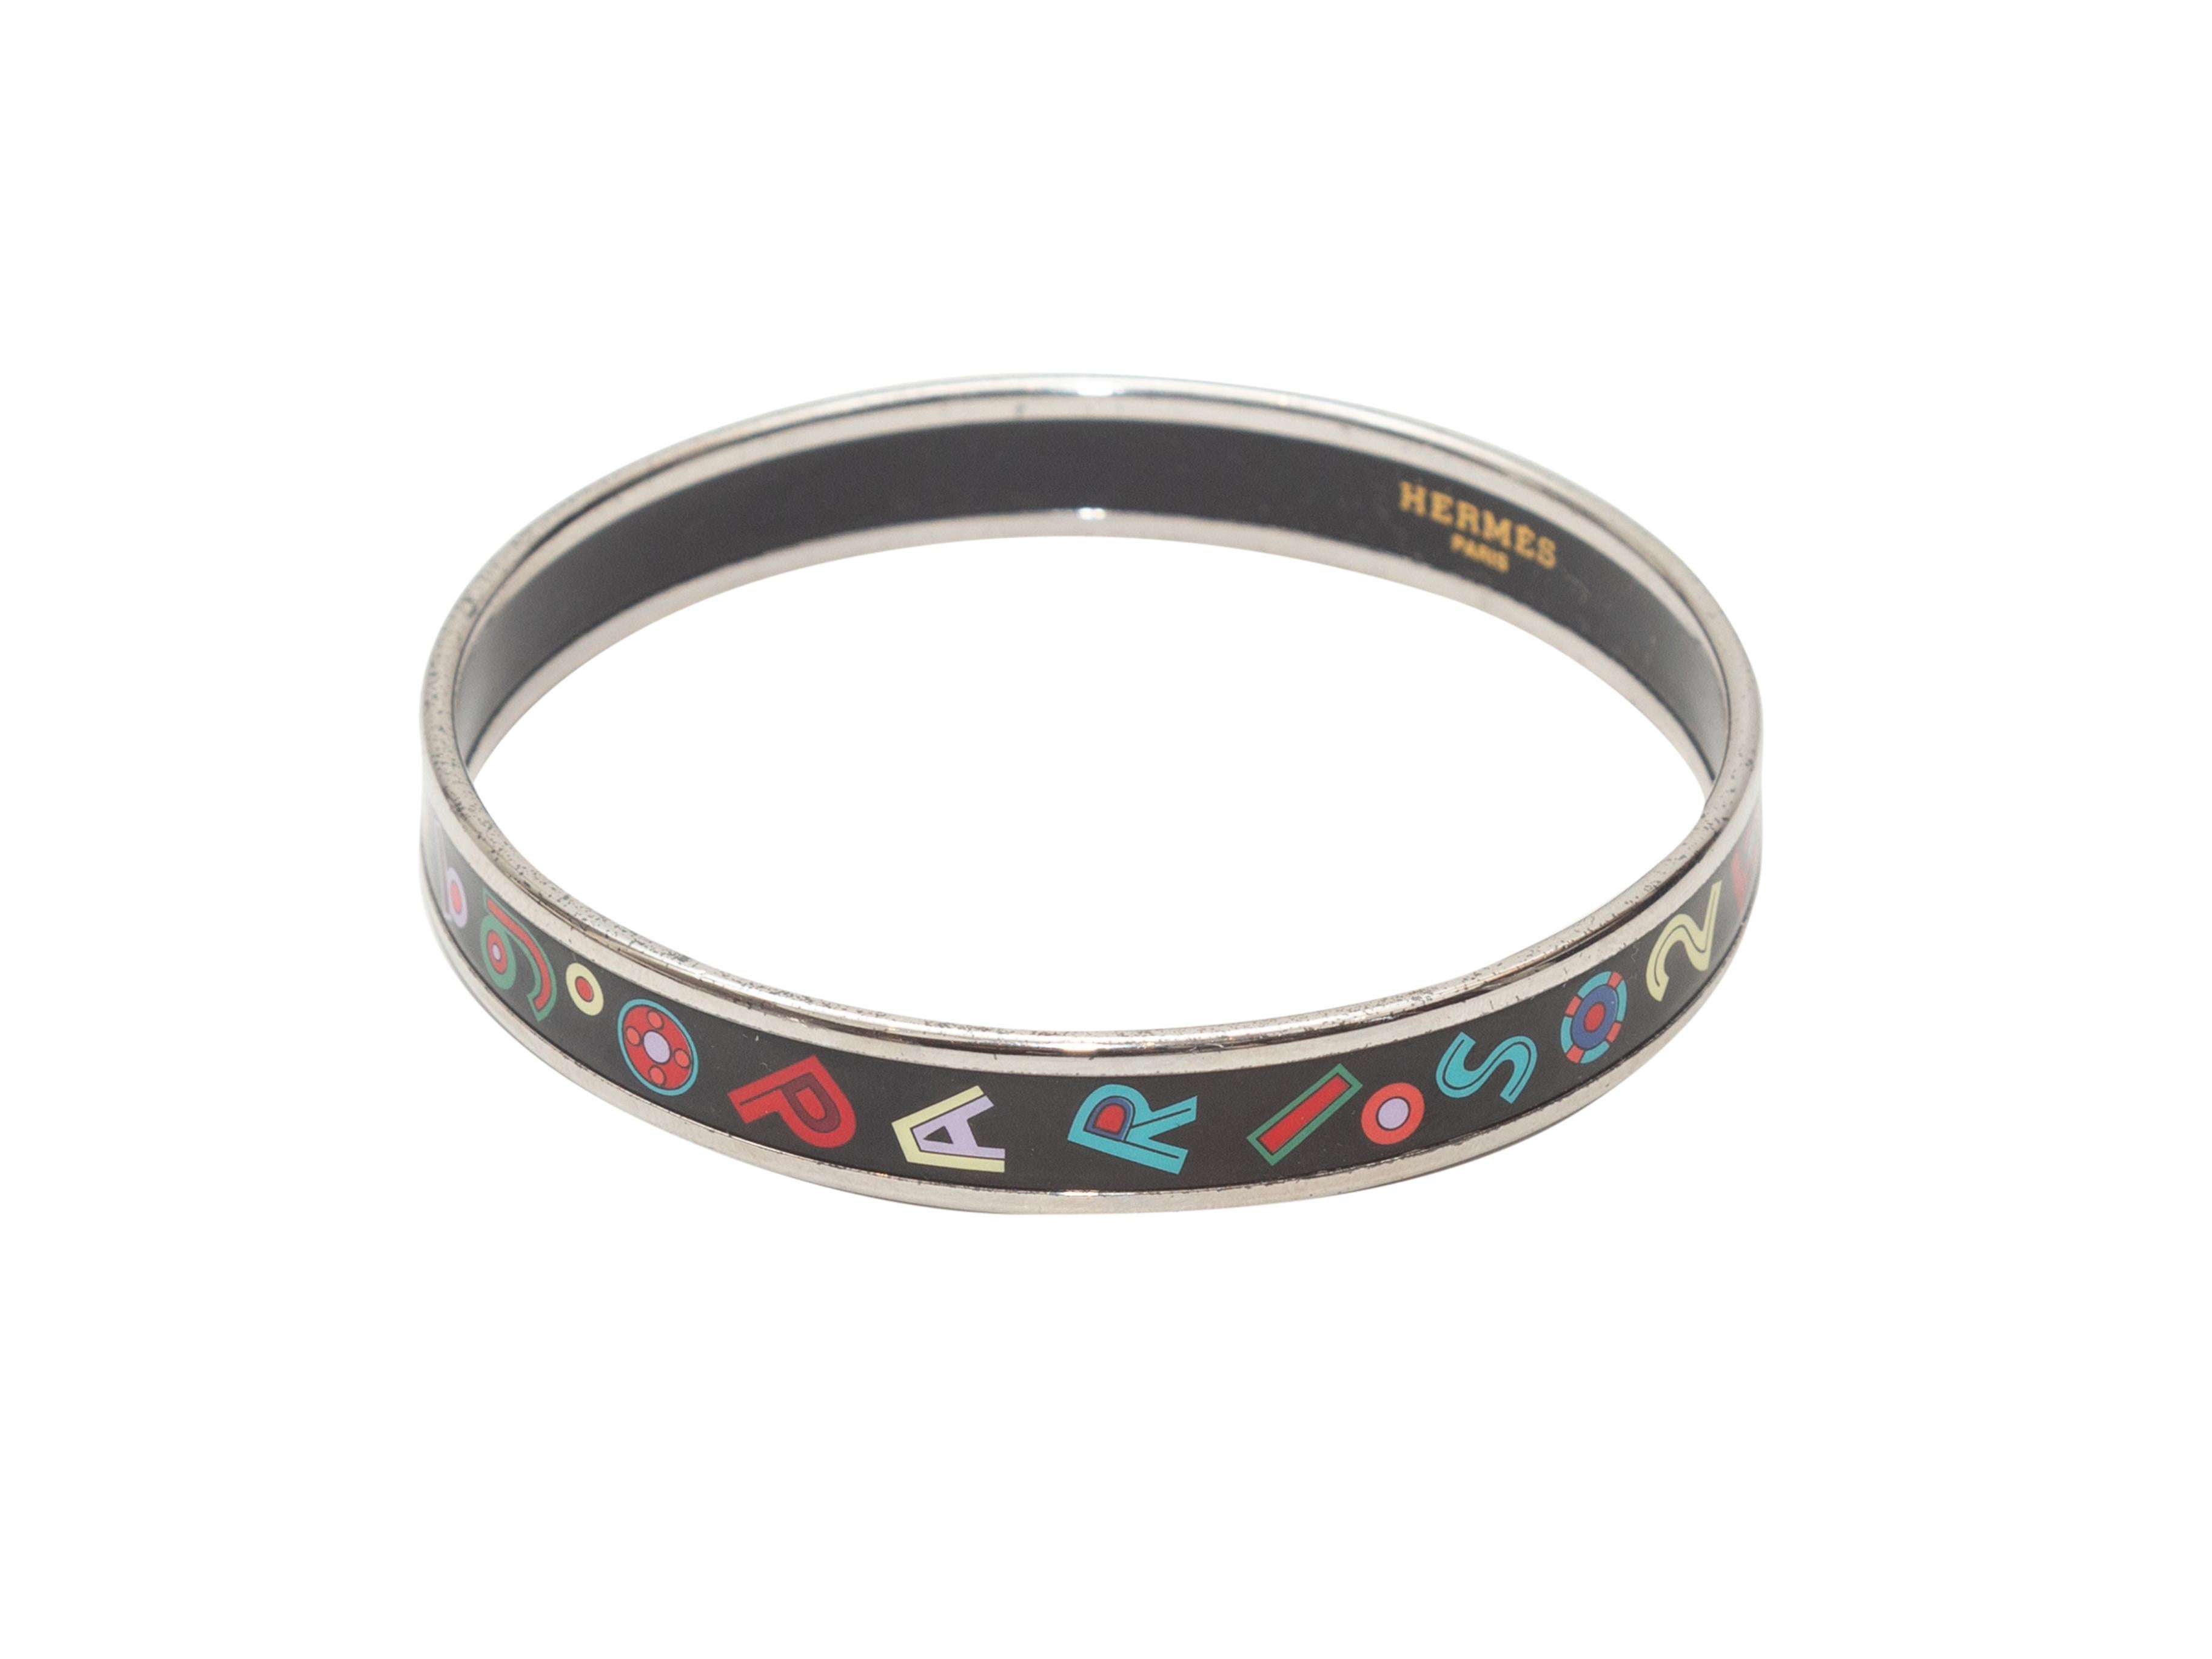 Product details: Black and multicolor enamel bangle bracelet by Hermes. Circa 2008. 2.75